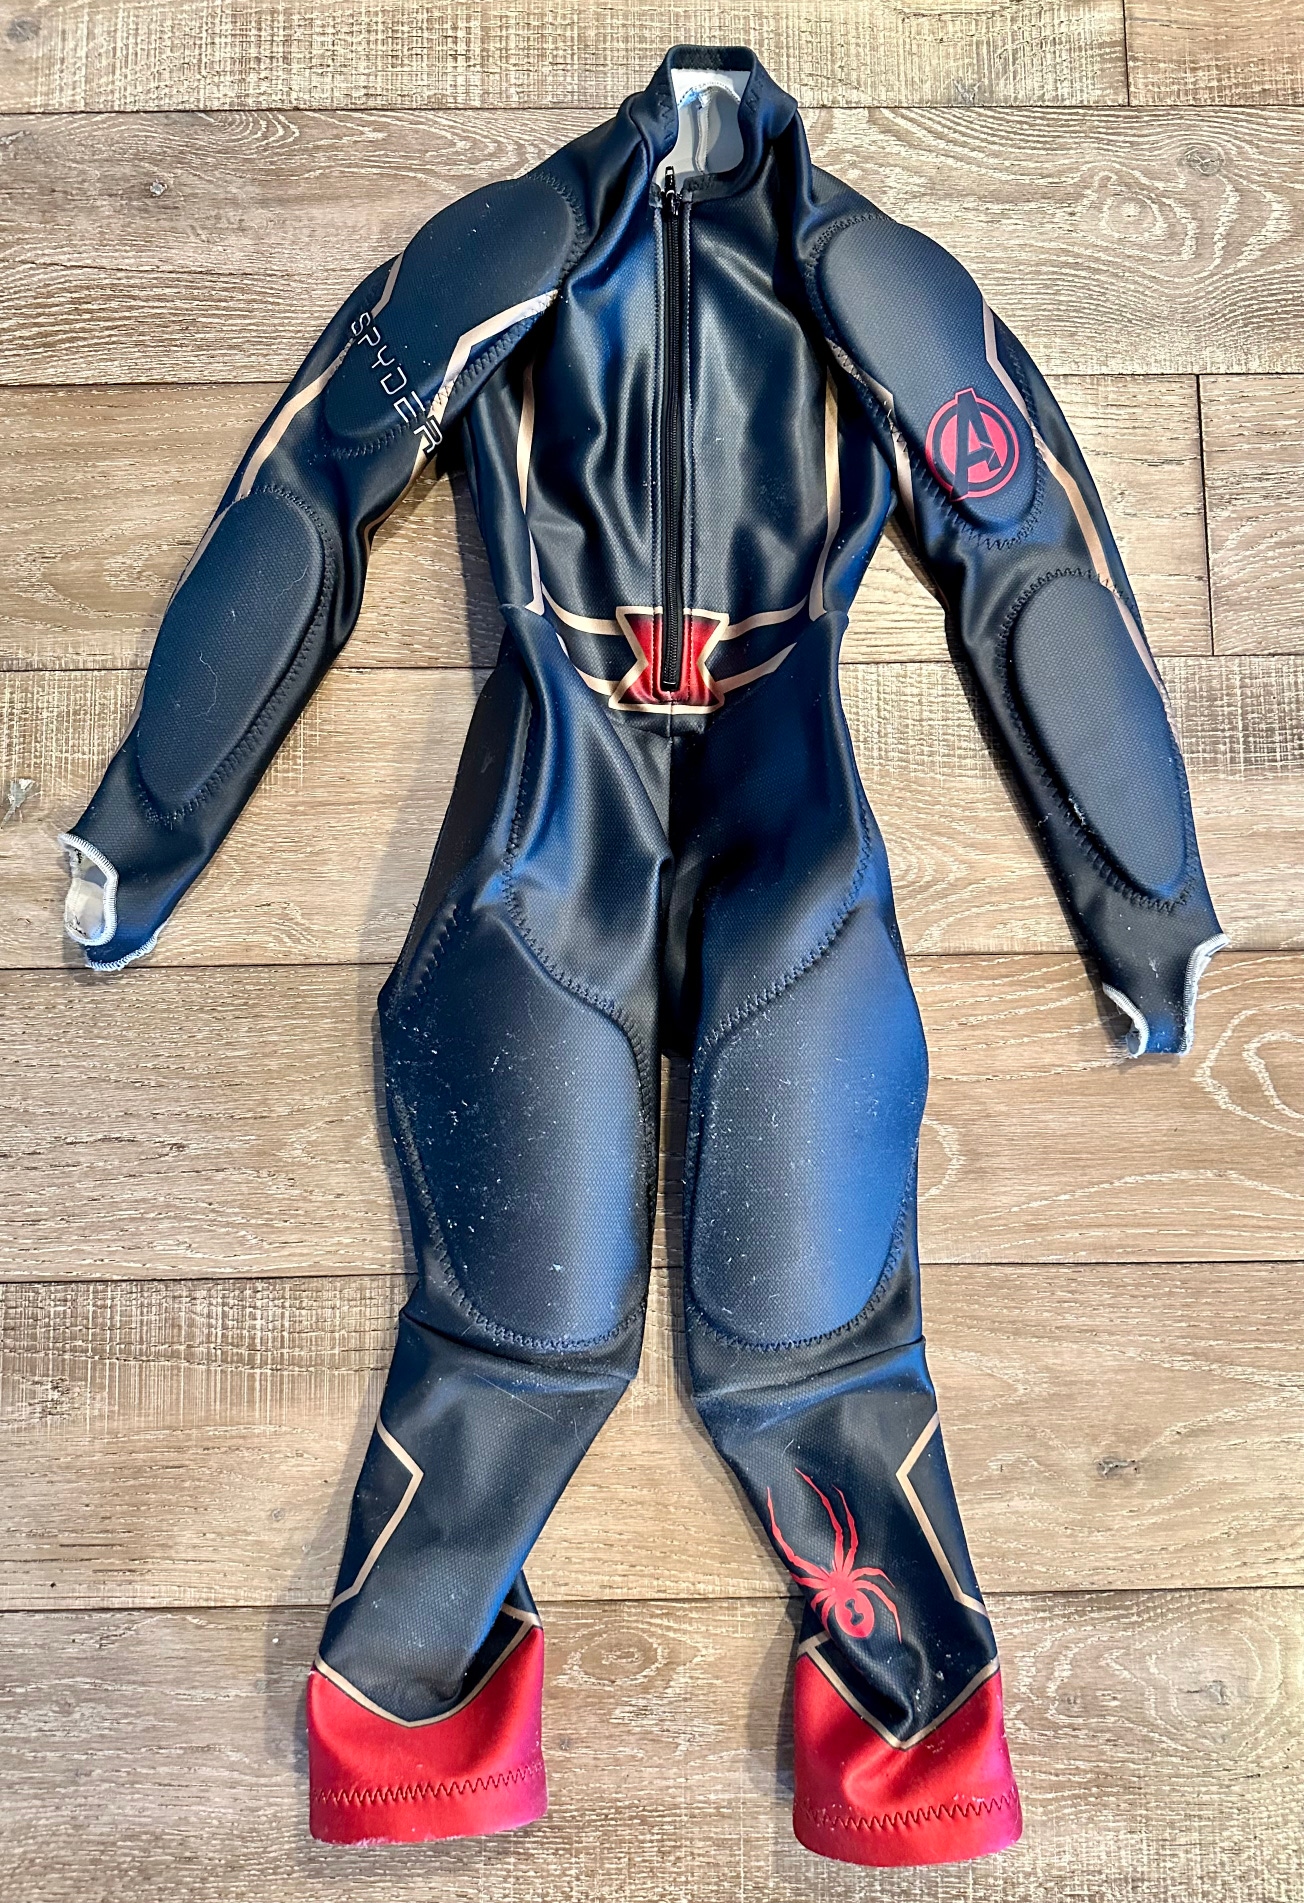 Spyder Marvel Black Widow junior GS race ski suit size 6/8